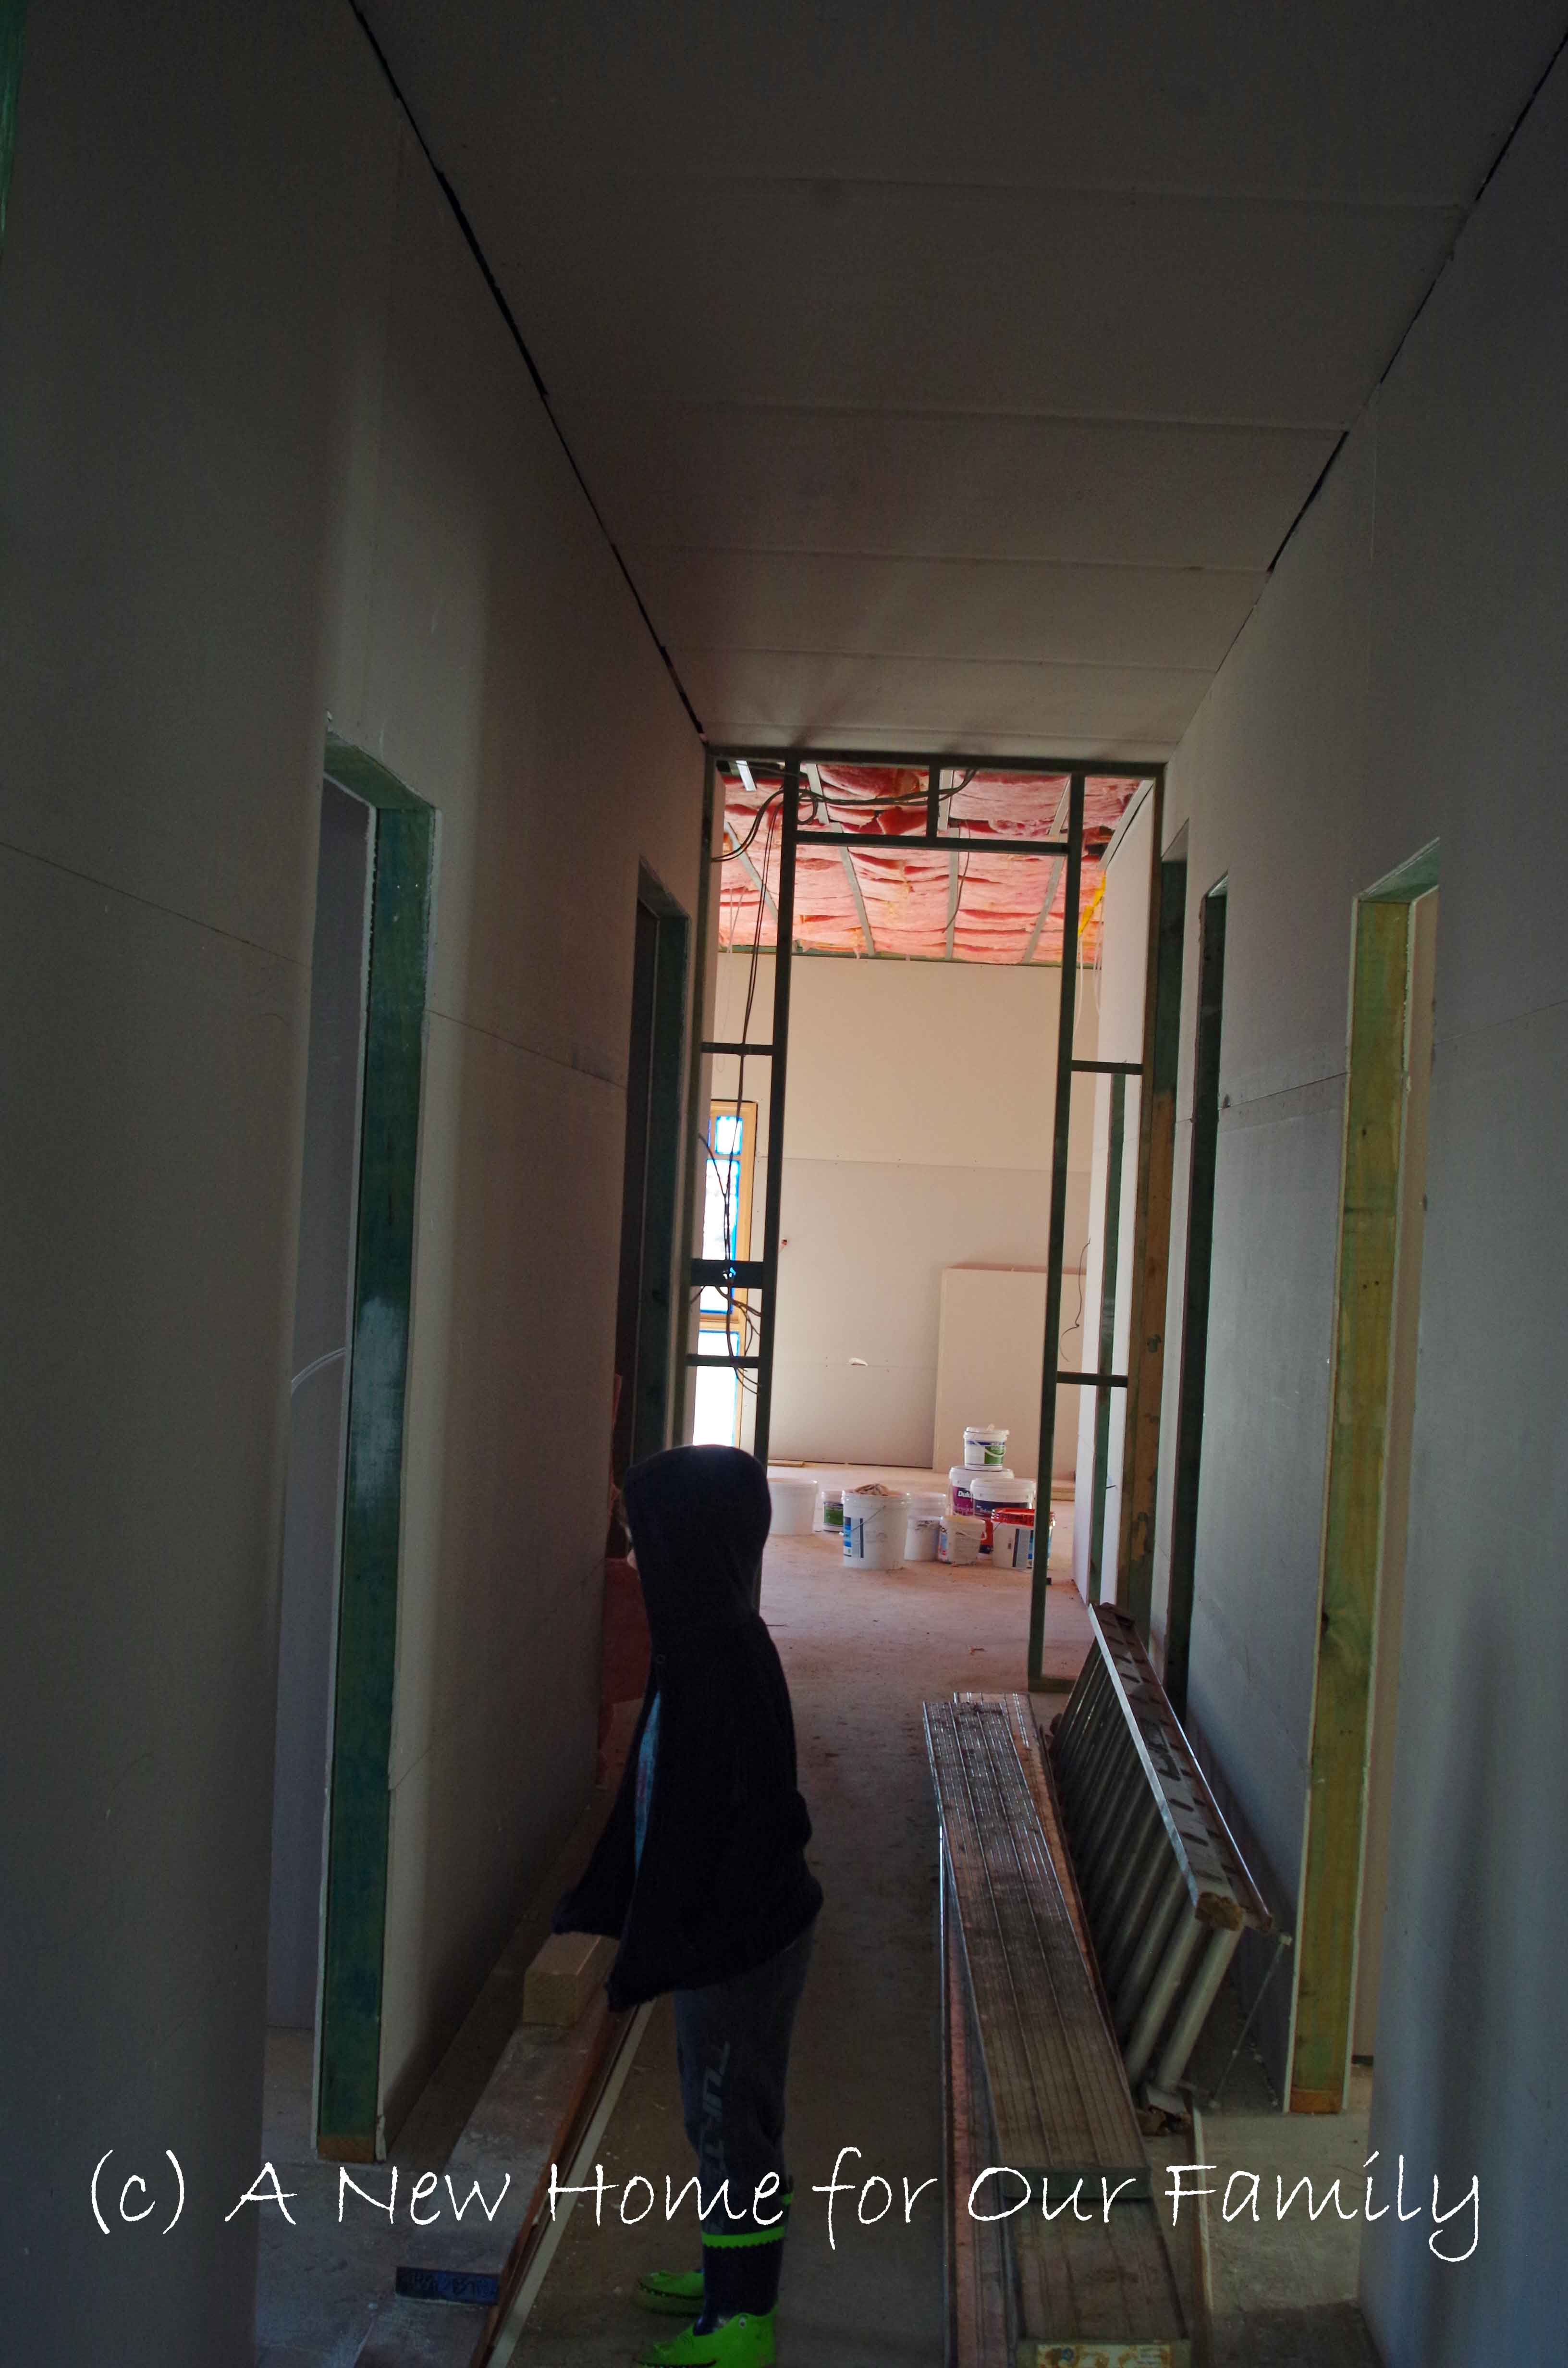 Plastering - Hallway